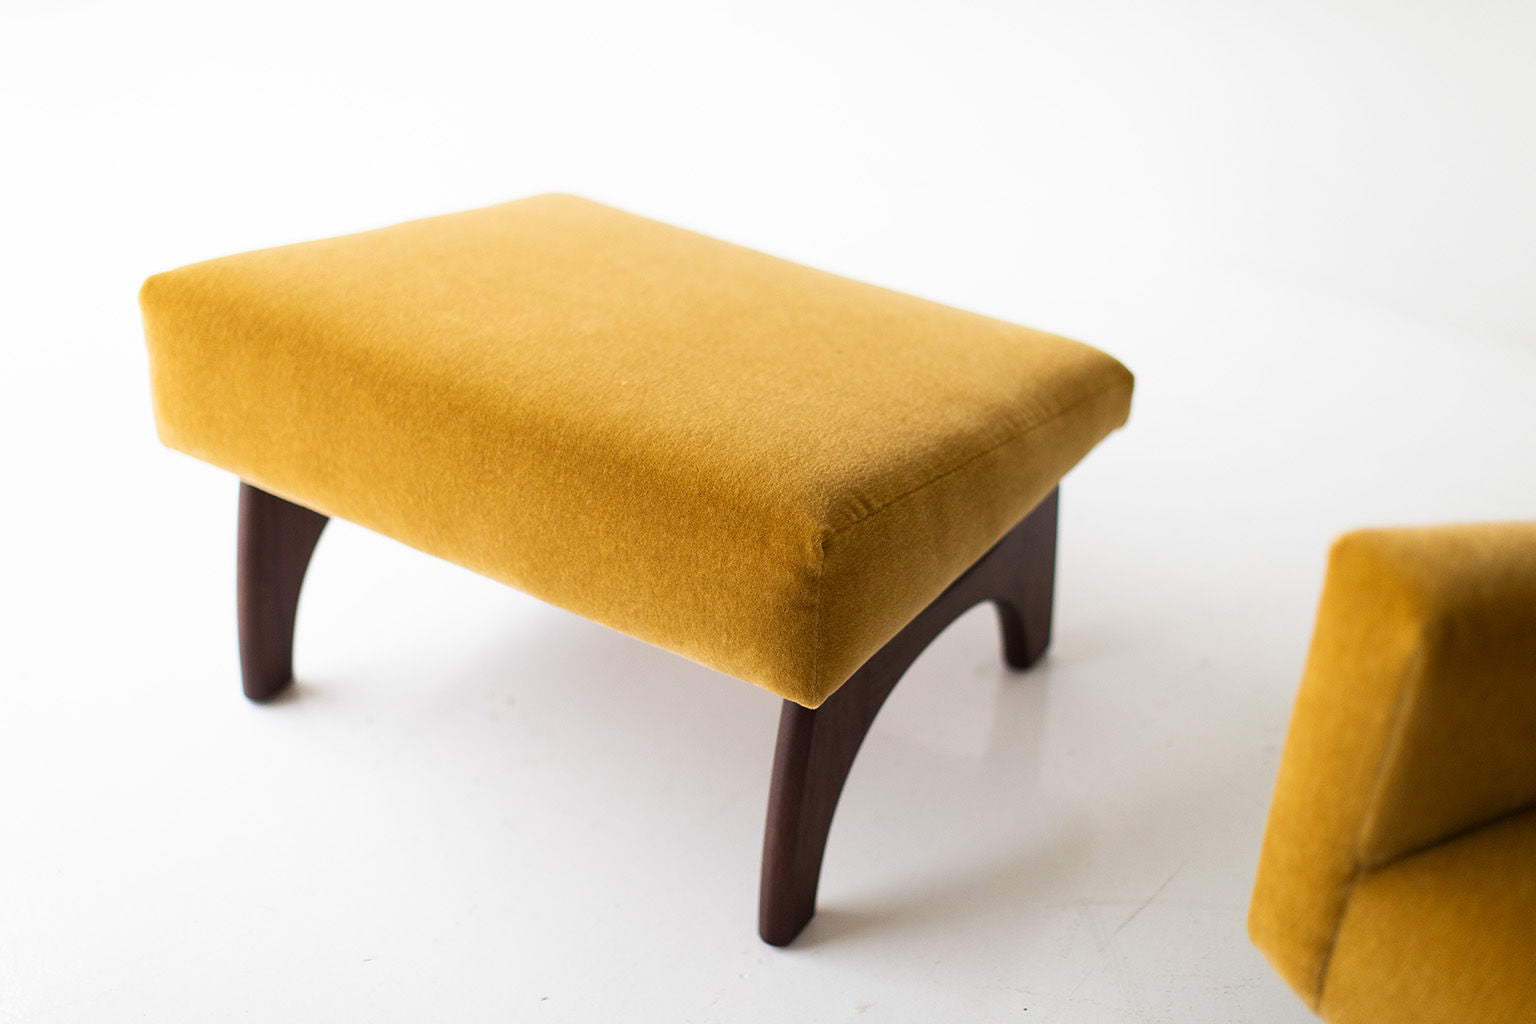 Canadian Modern Upholstered Ottoman - 2315